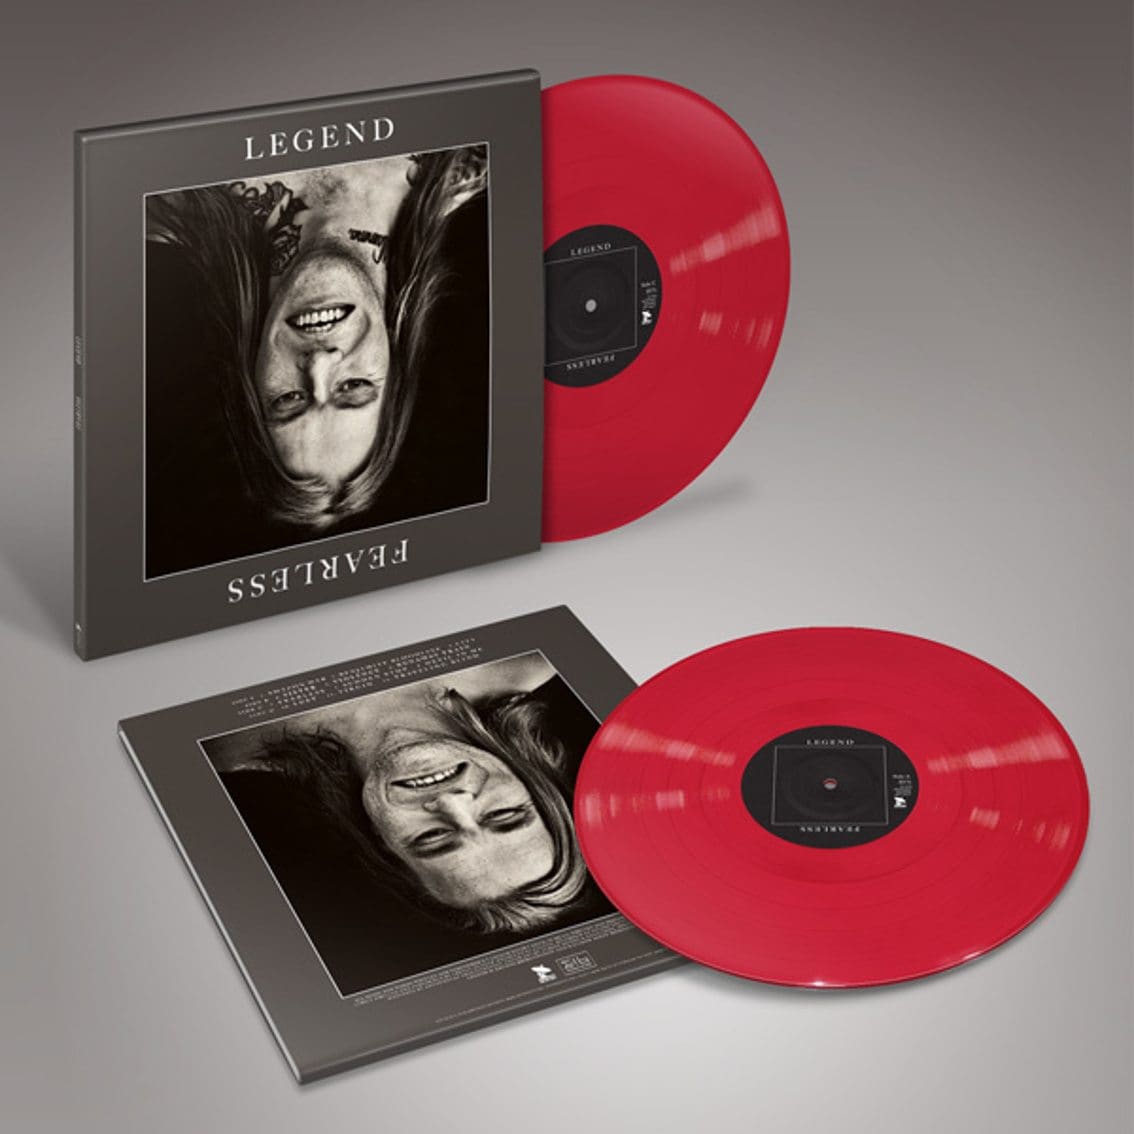 Legend issue remastered 'Fearless' album on (red) vinyl